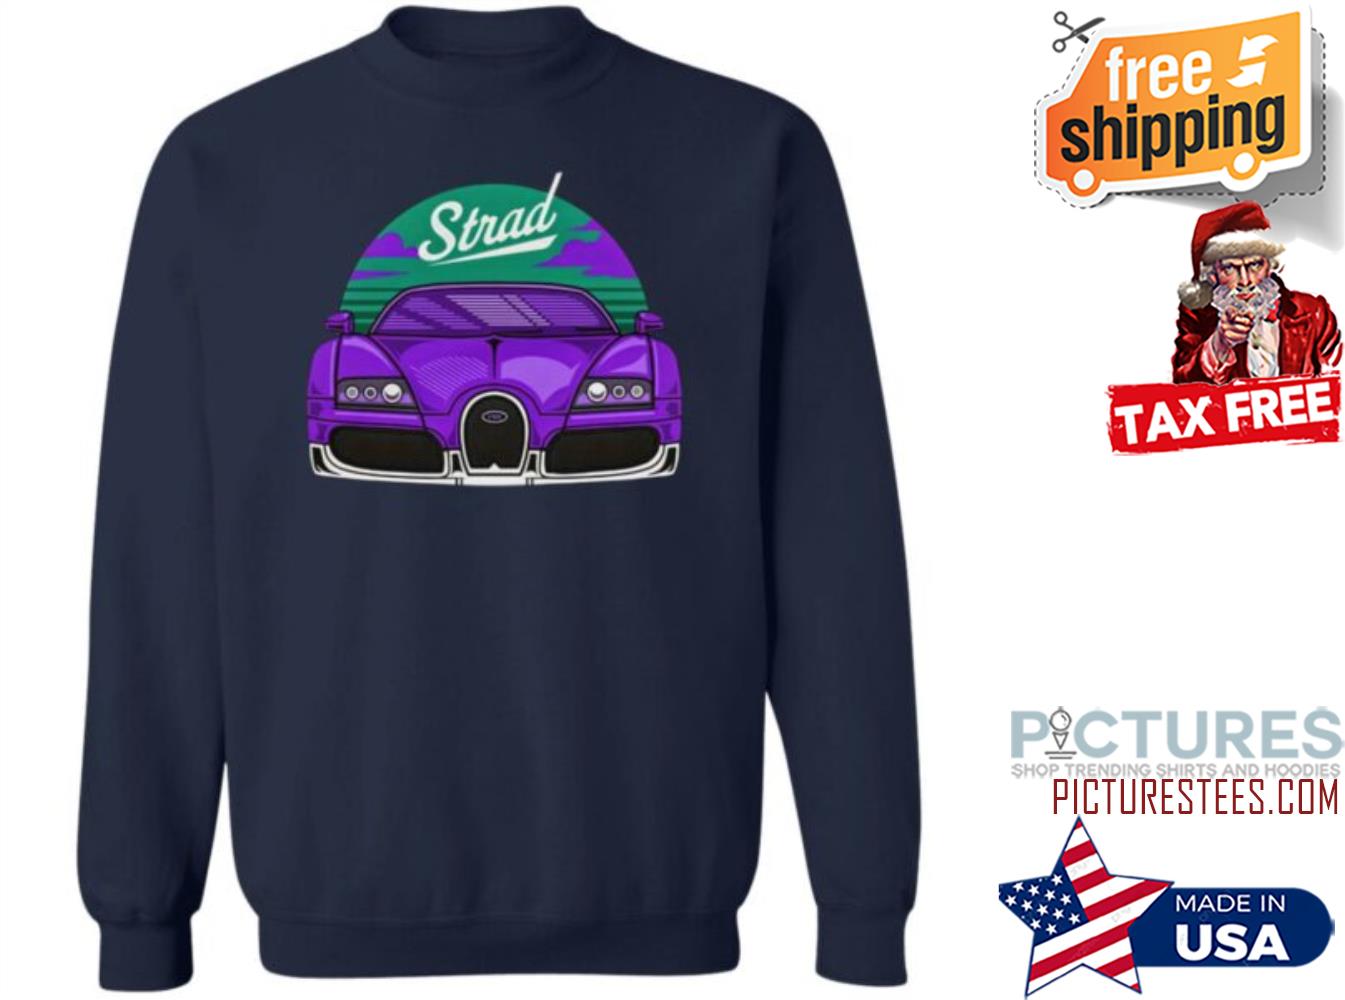 tank Tee shipping FREE Stradman and Bugatti tee, Unisex Strad sweater, shirt, v-neck top hoodie,